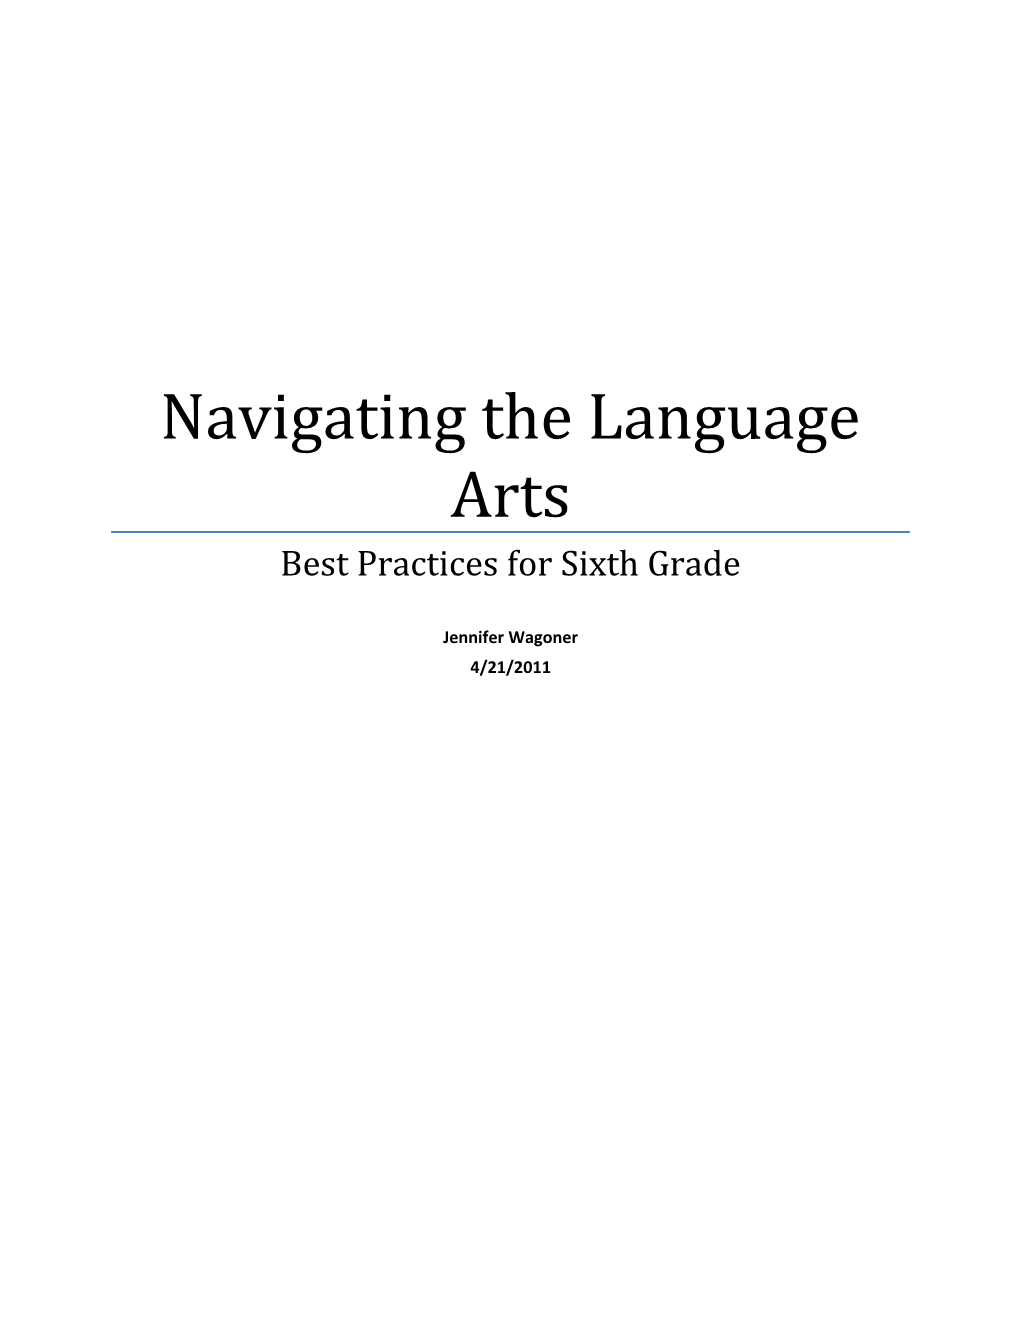 Navigating the Language Arts